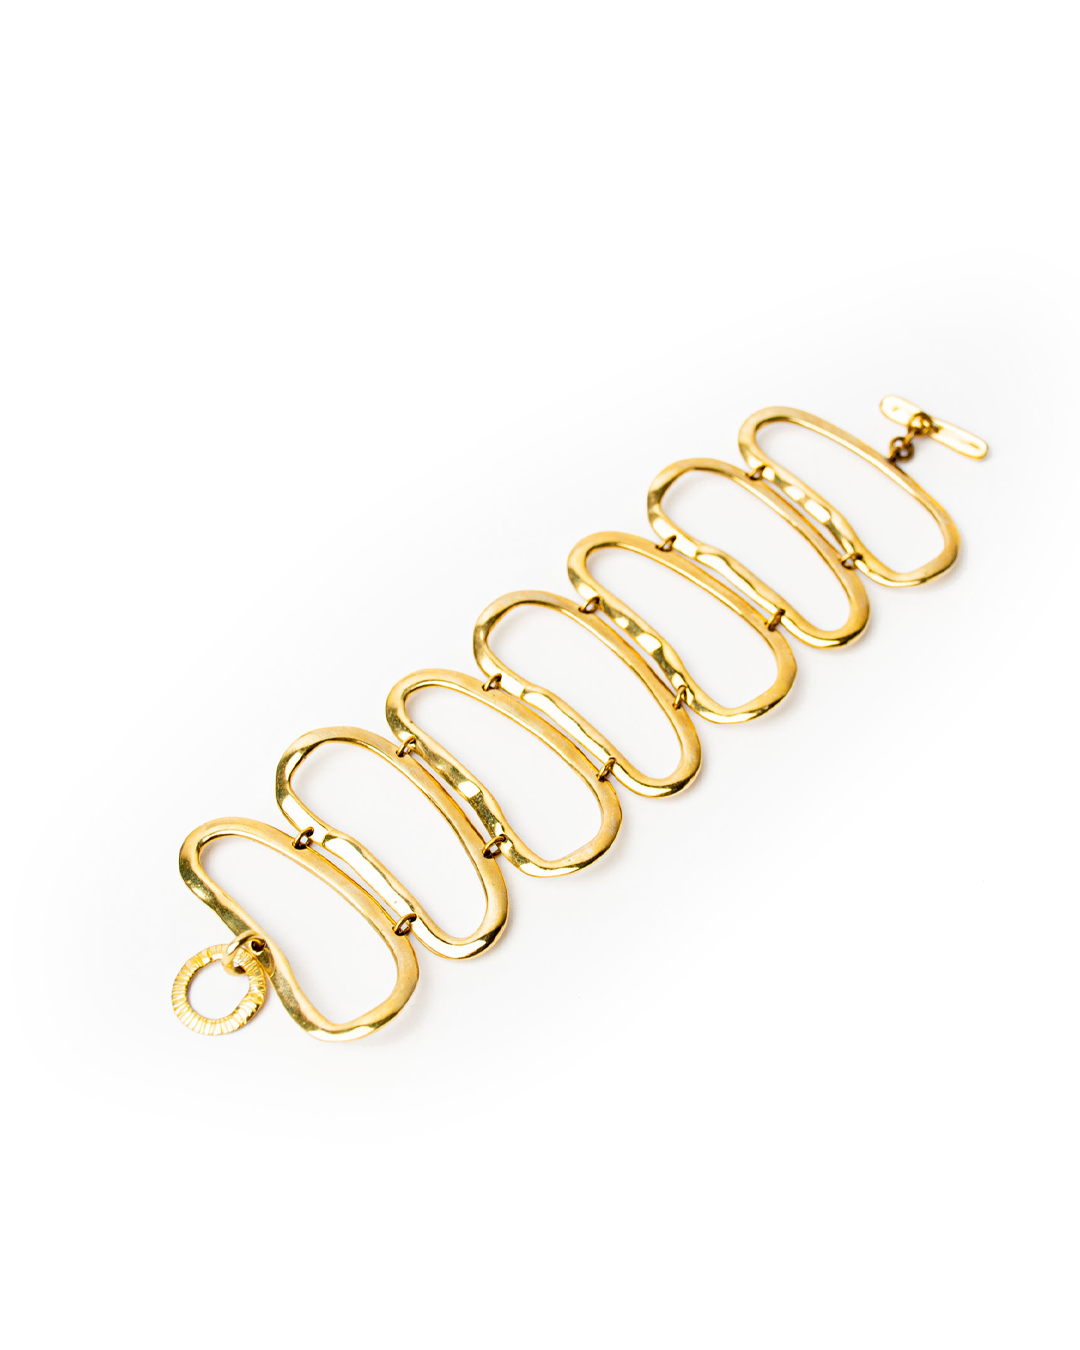 Handmade brass bracelet benbar